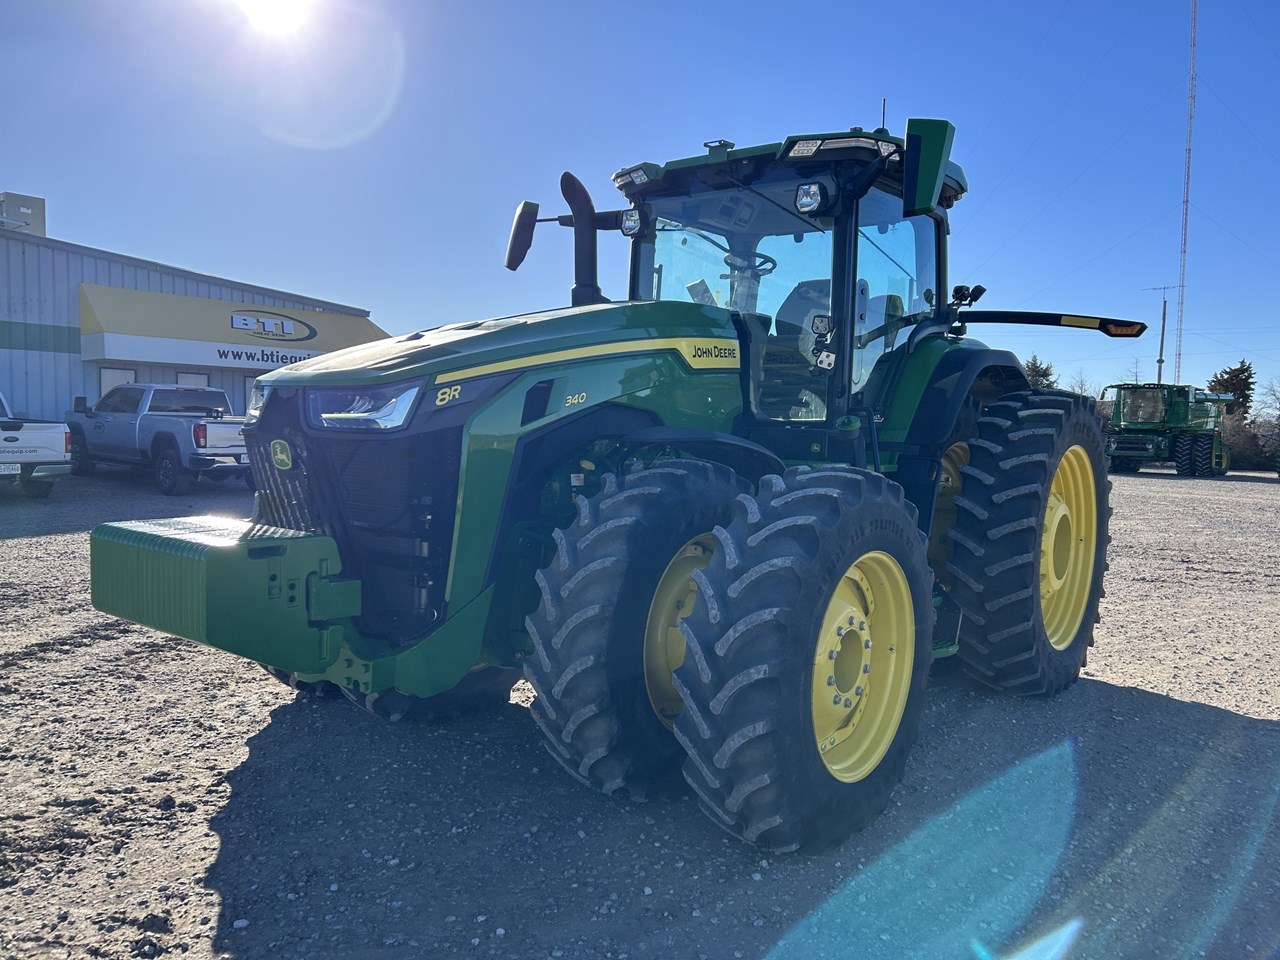 2021 John Deere 8r 340 Tractor Row Crop For Sale In Great Bend Kansas 6673